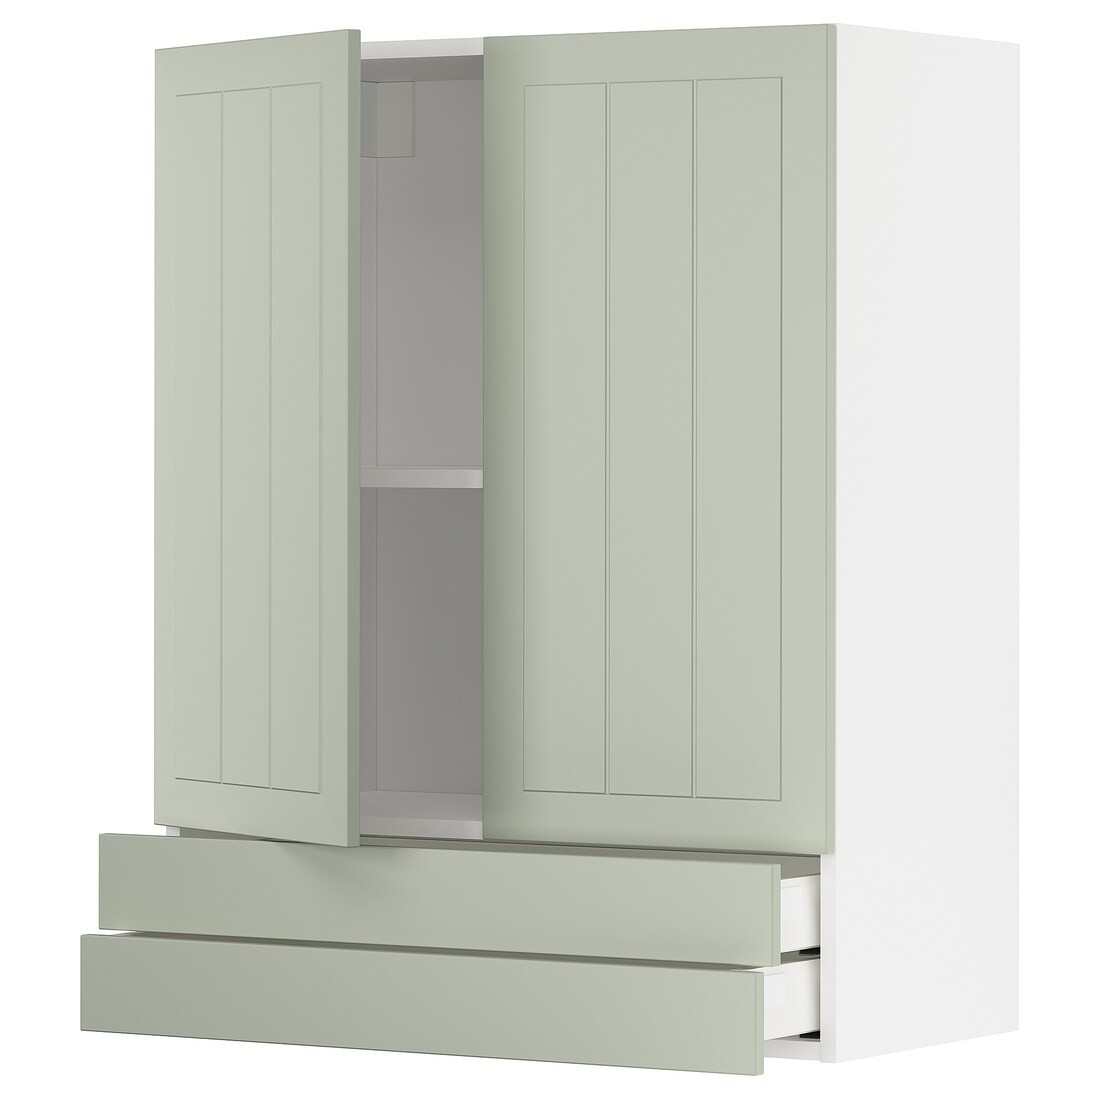 IKEA METOD МЕТОД / MAXIMERA МАКСИМЕРА Навесной шкаф / 2 дверцы / 2 ящика, белый / Stensund светло-зеленый, 80x100 см 39486798 394.867.98